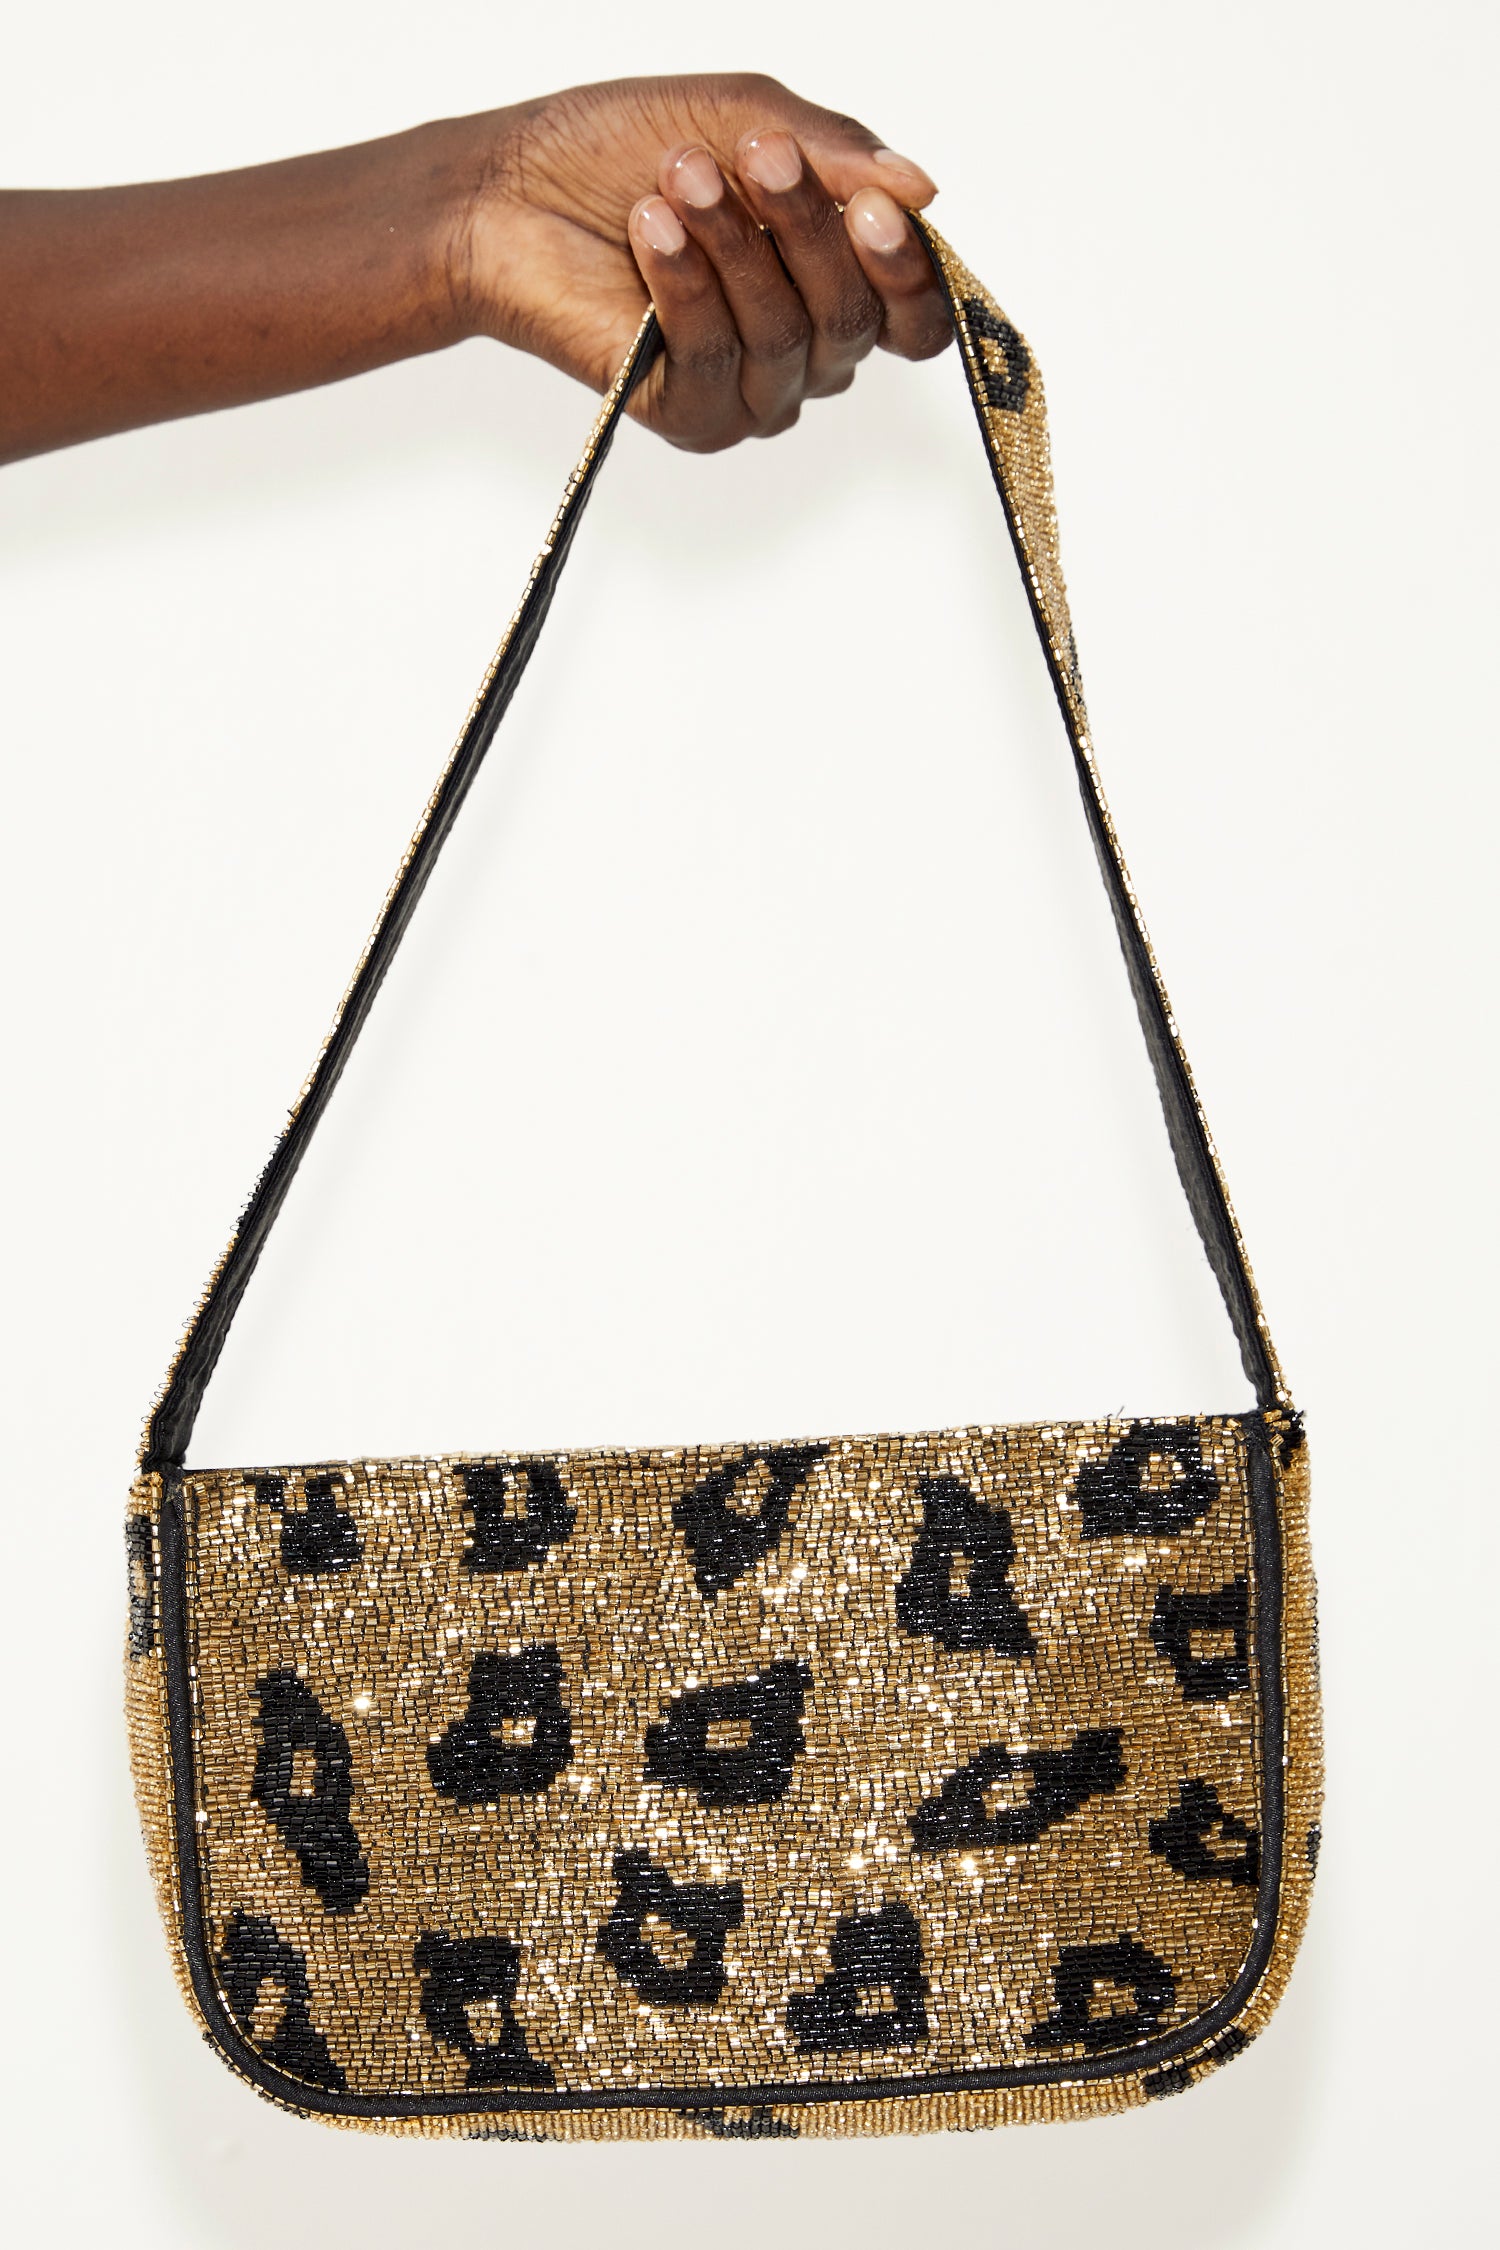 DECADENT Medium Satchel Bag in Leopard. Worn by danish blogger